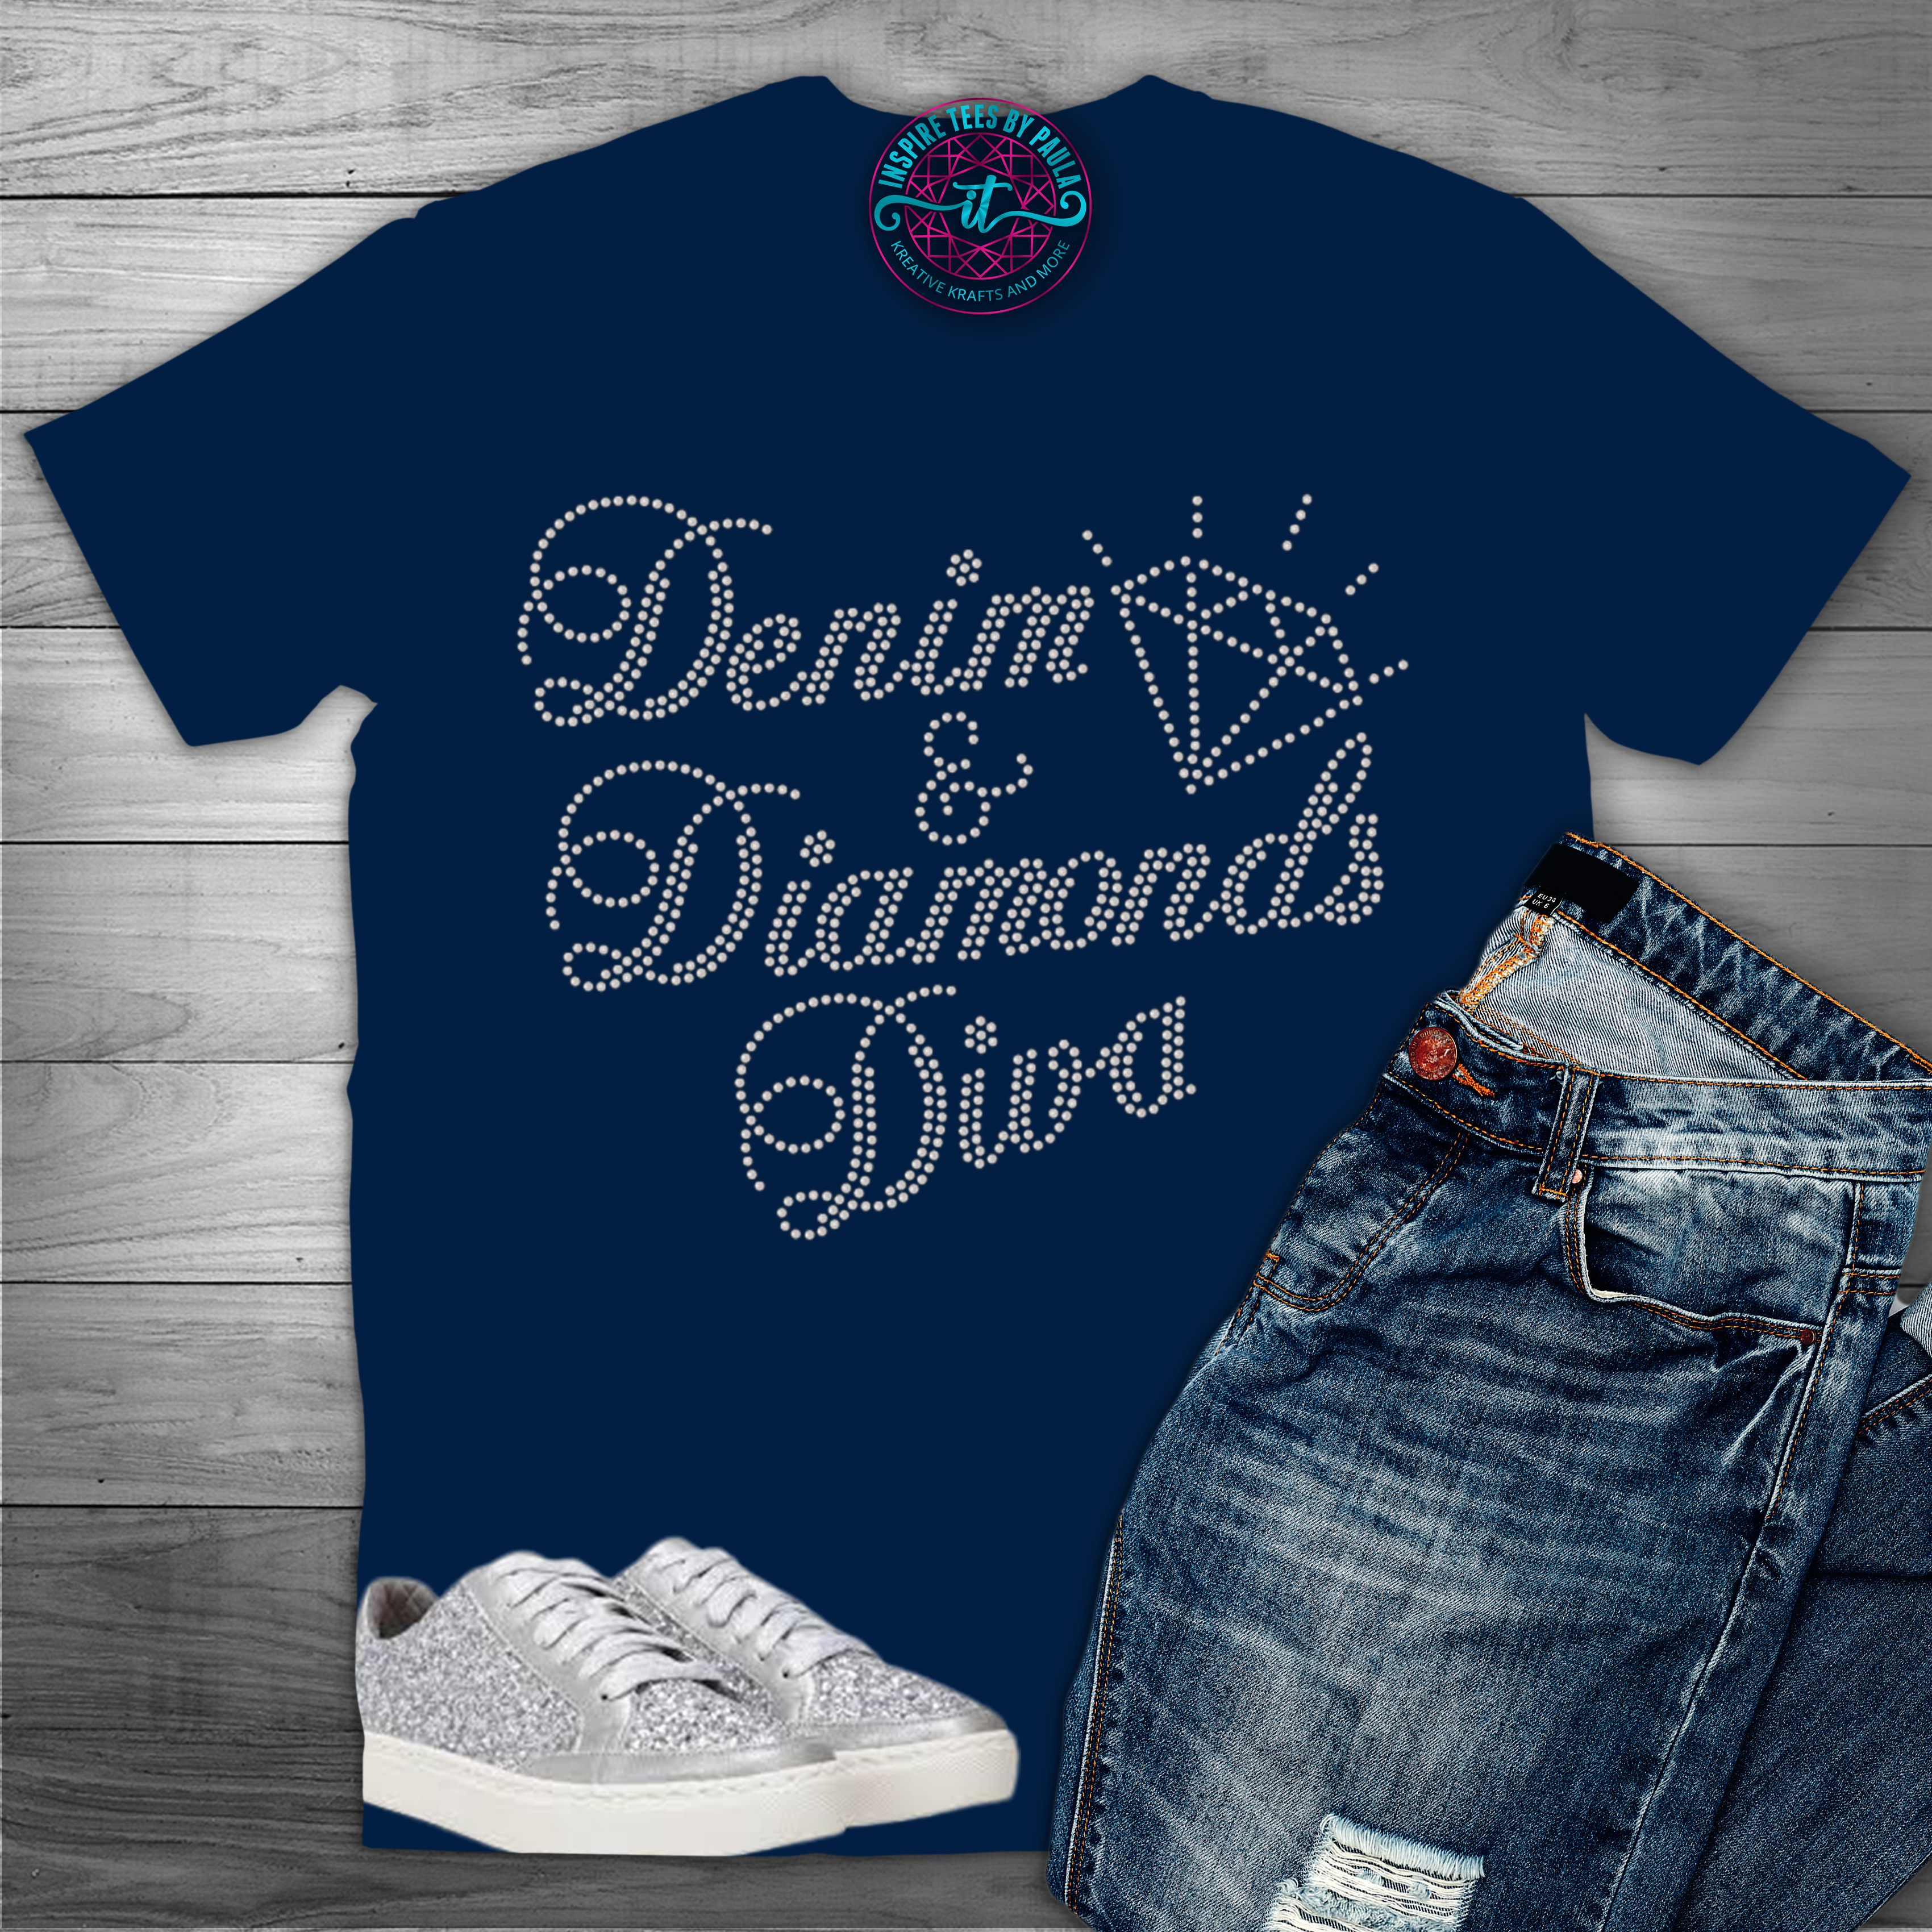 Denim & Diamonds. Fashion Collage by DanielleJevette created on Polyvore